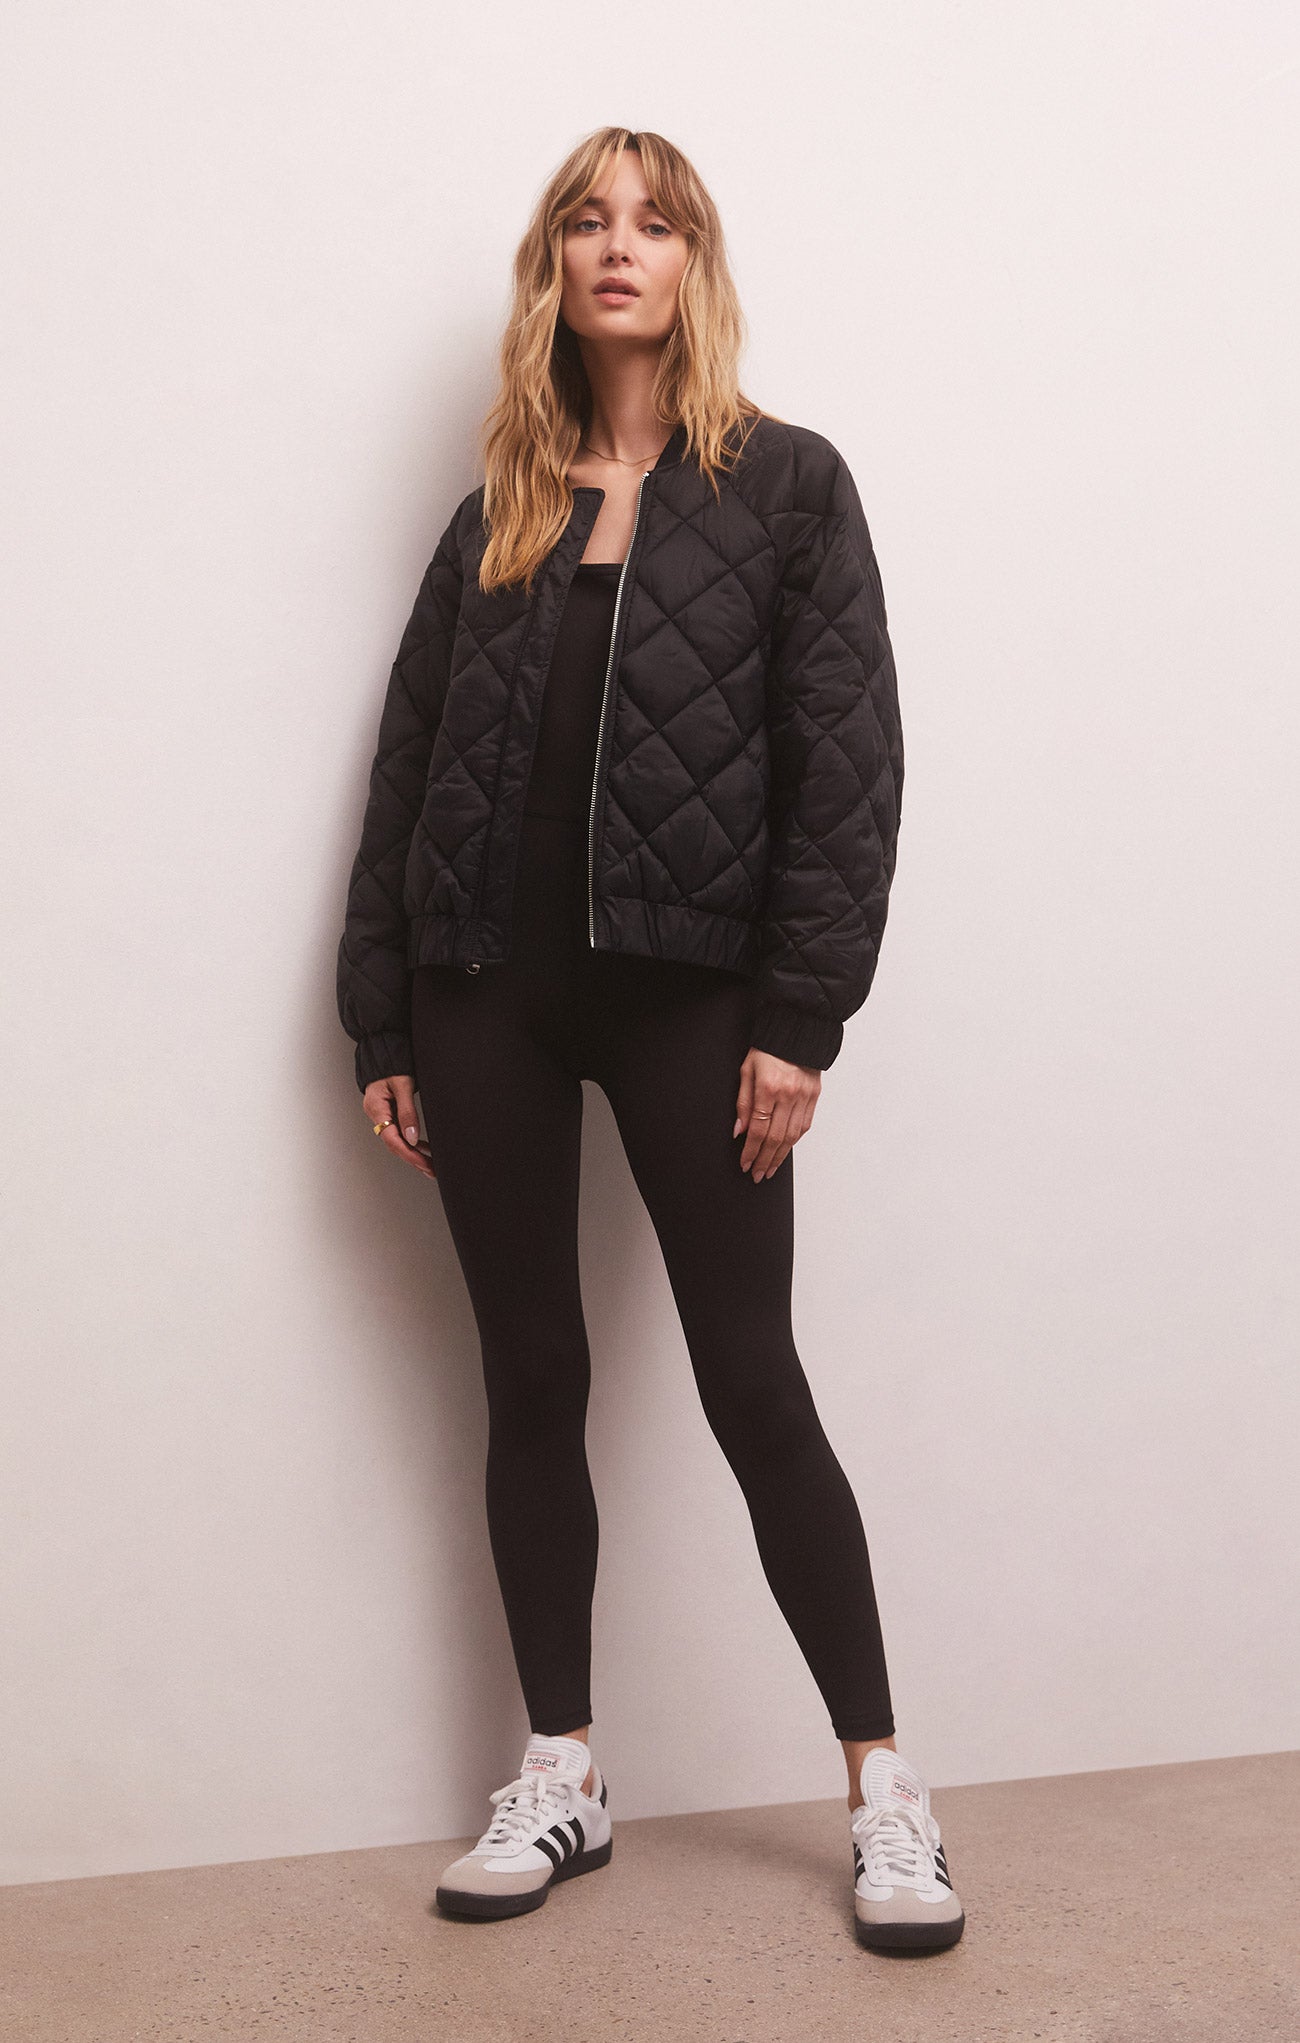 Z Supply Activewear Women's Reversible Nylon Jacket, Black, Medium